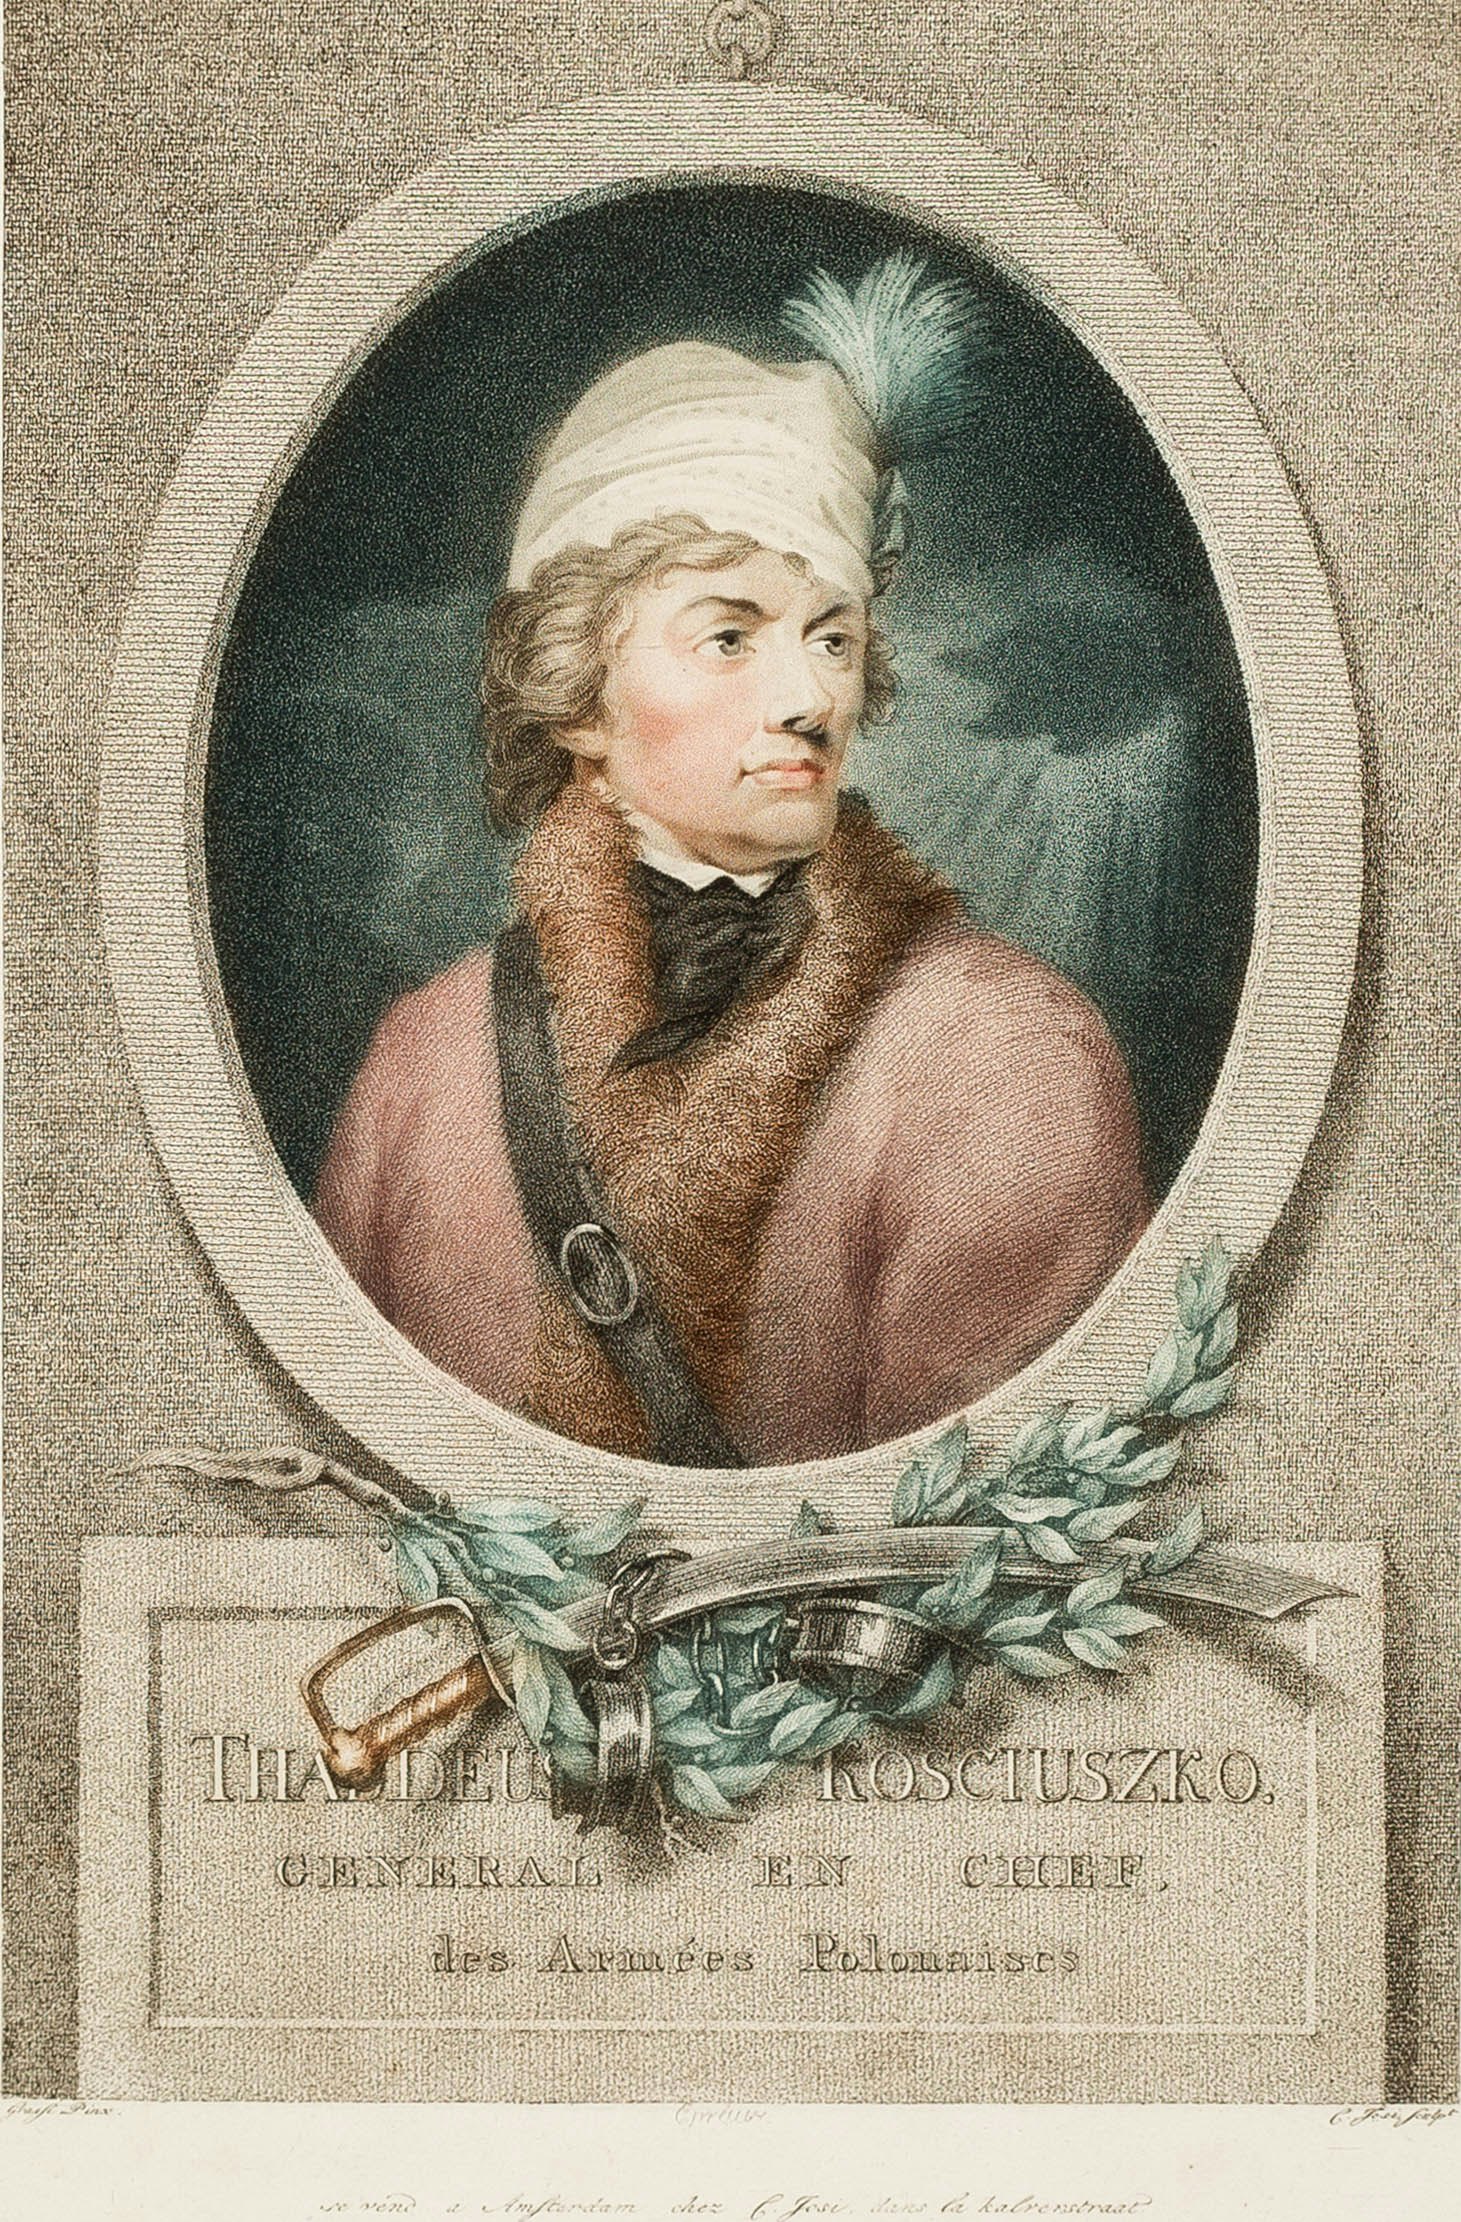 Portrait of Tadeusz Kosciuszko